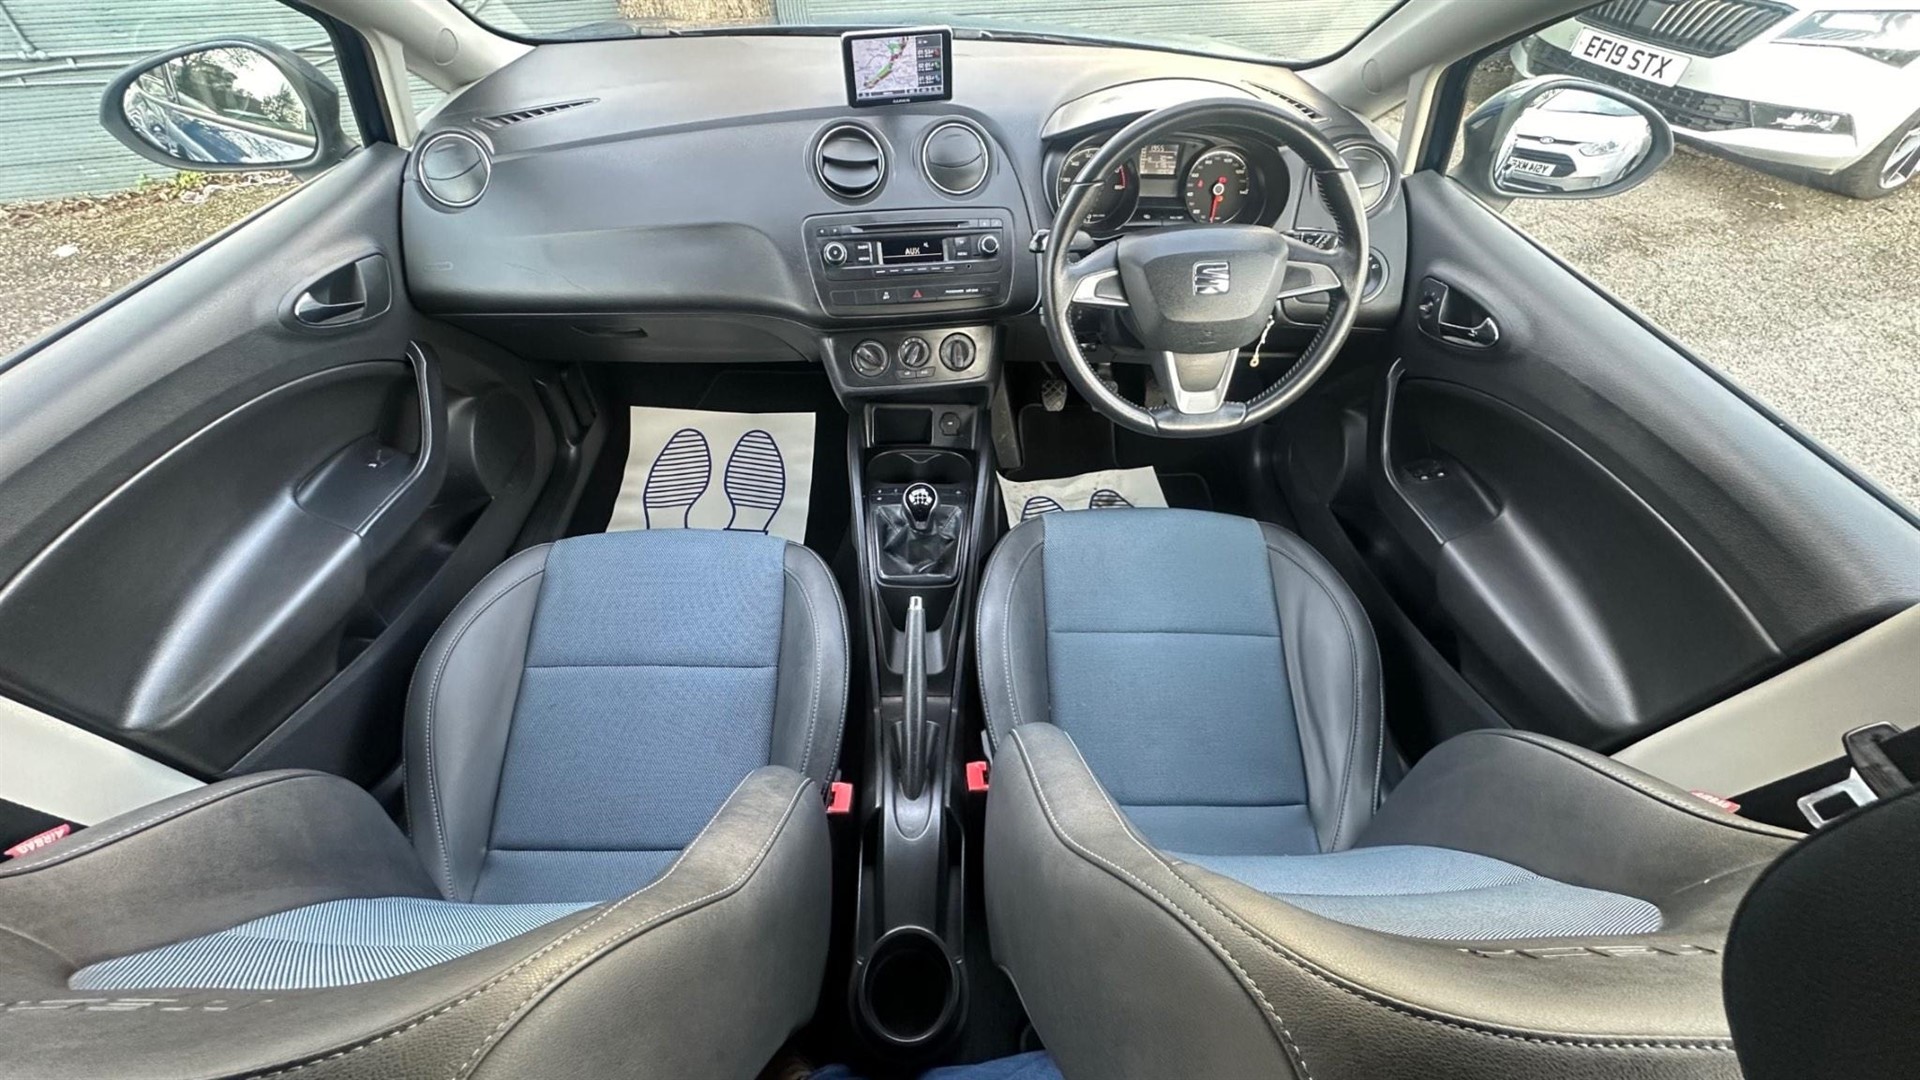 Seat Ibiza Interior Layout & Technology